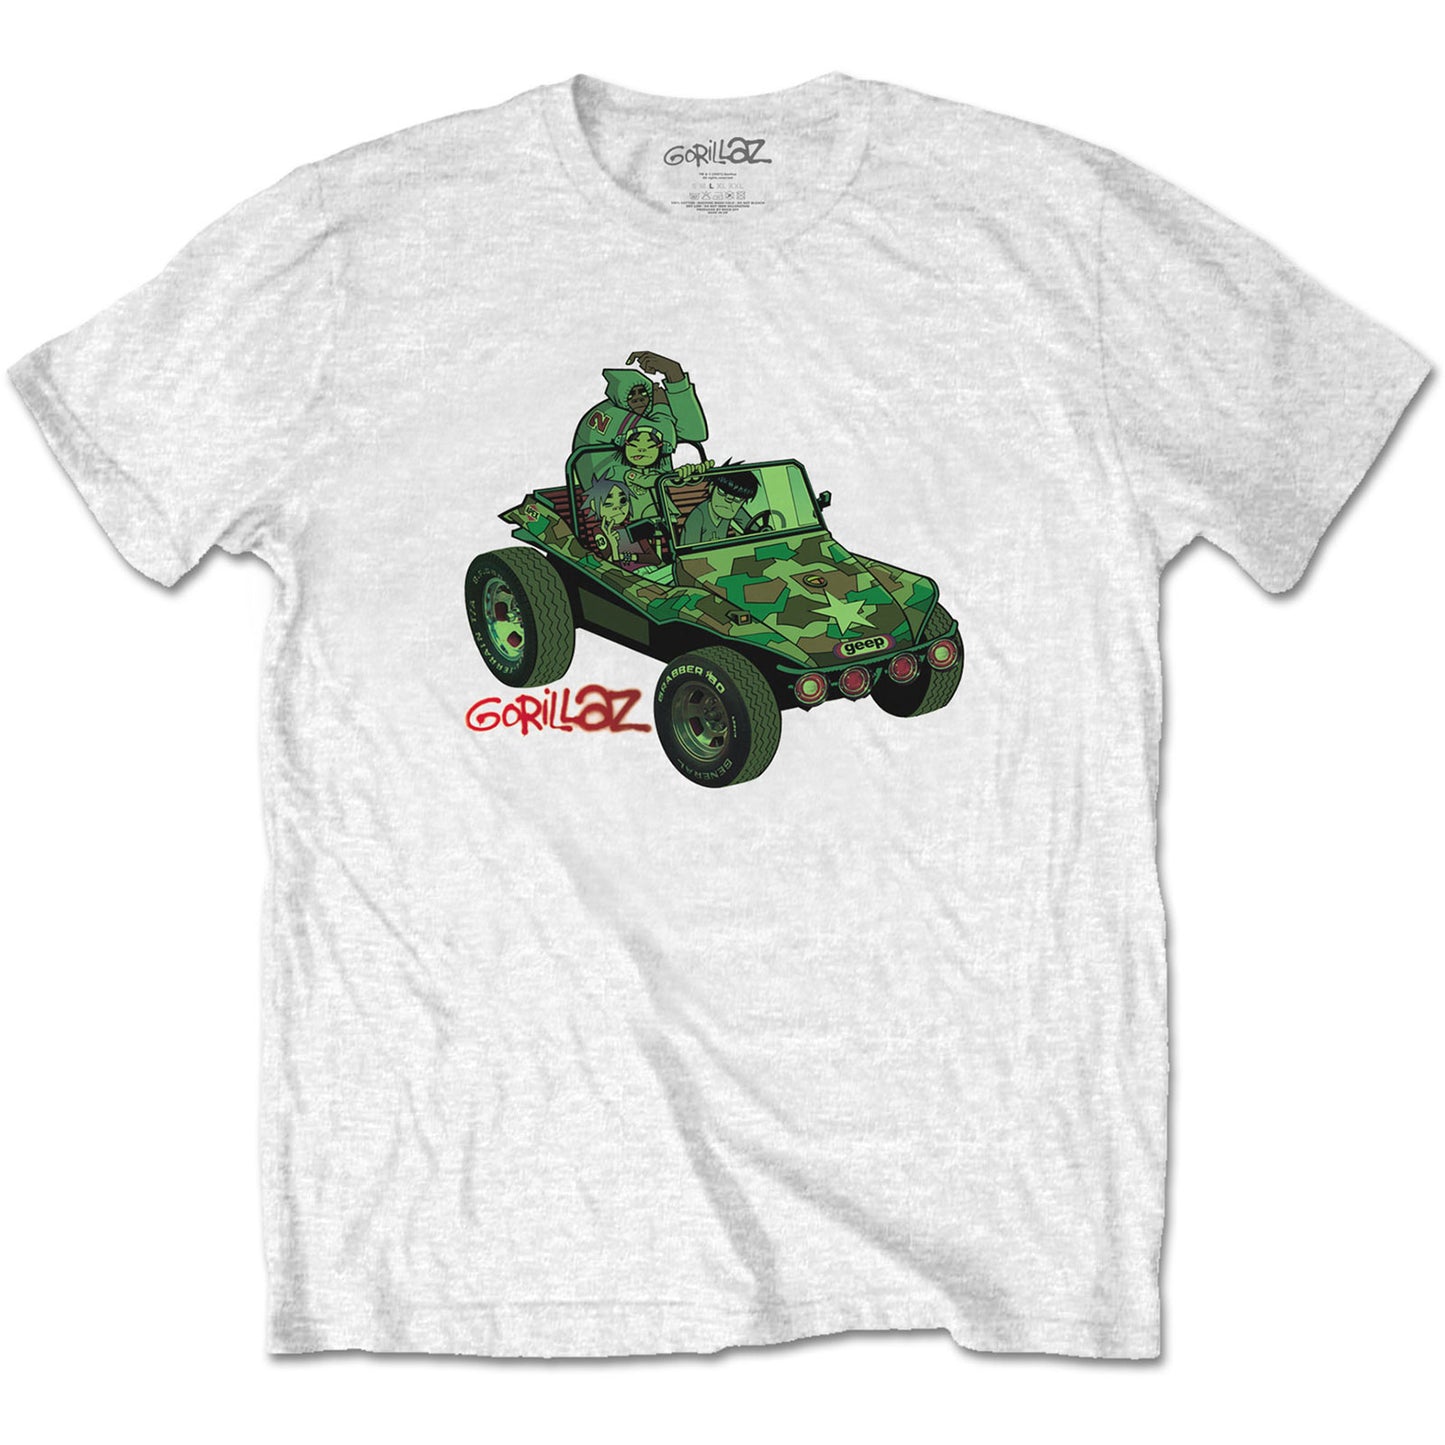 Gorillaz Unisex T-Shirt: Green Jeep